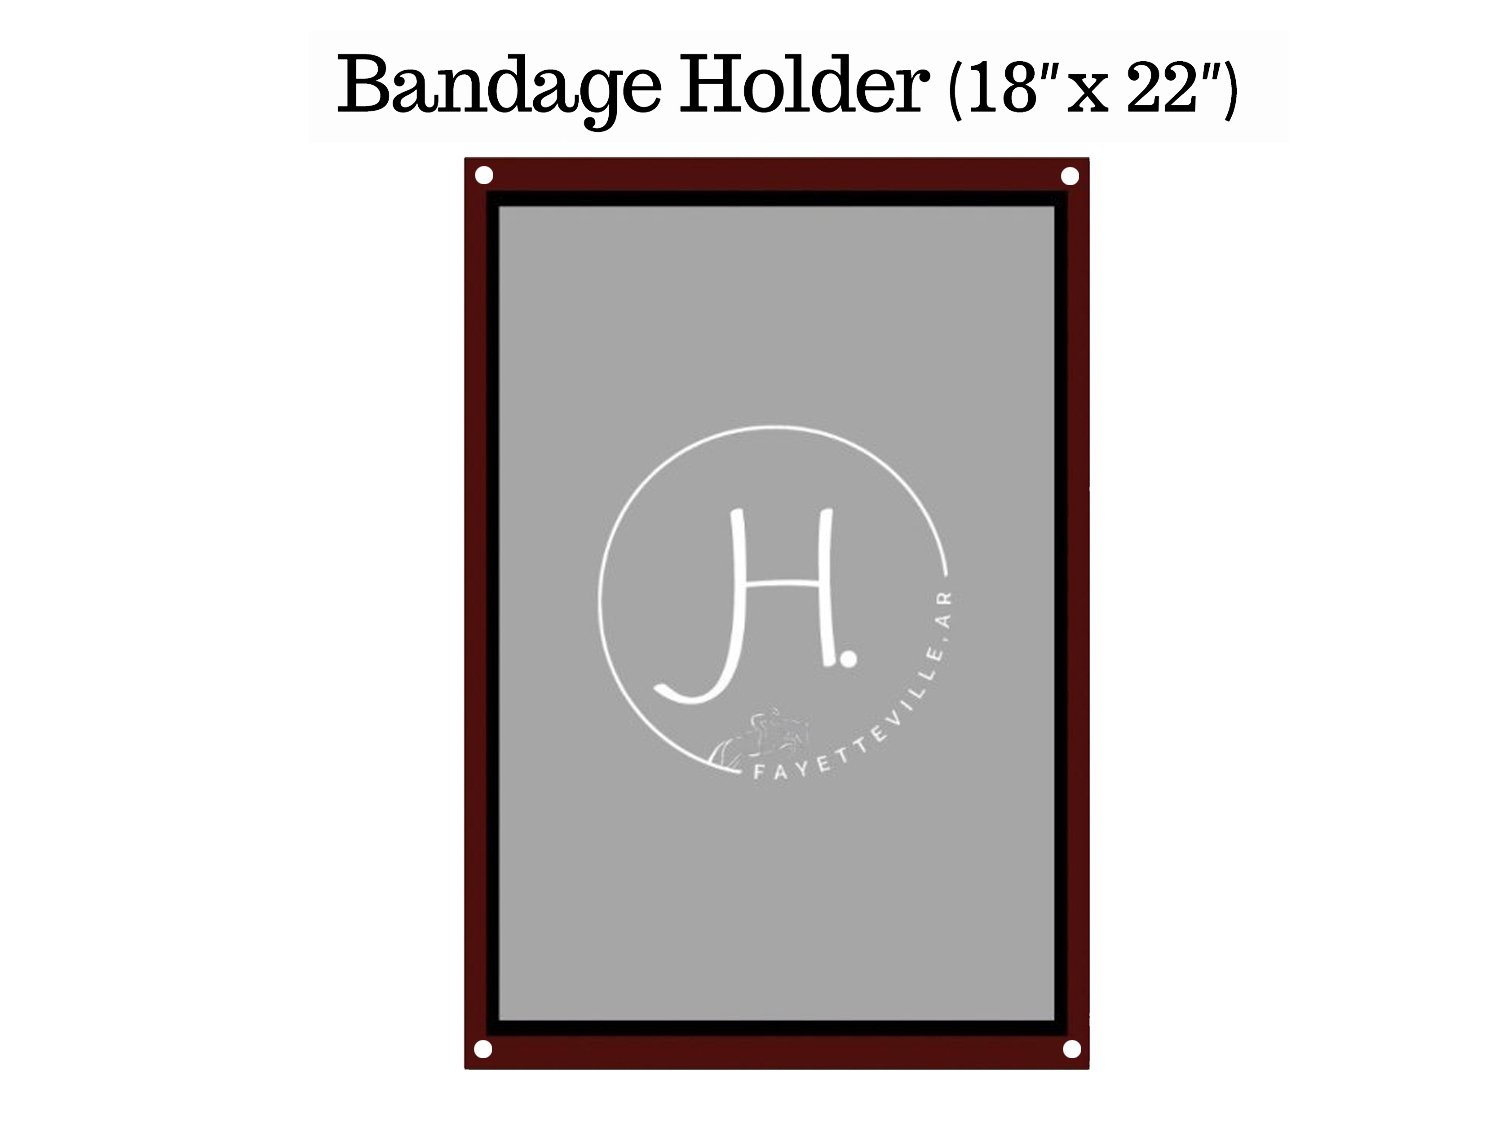 BandageHolderschematic2 copy.jpg